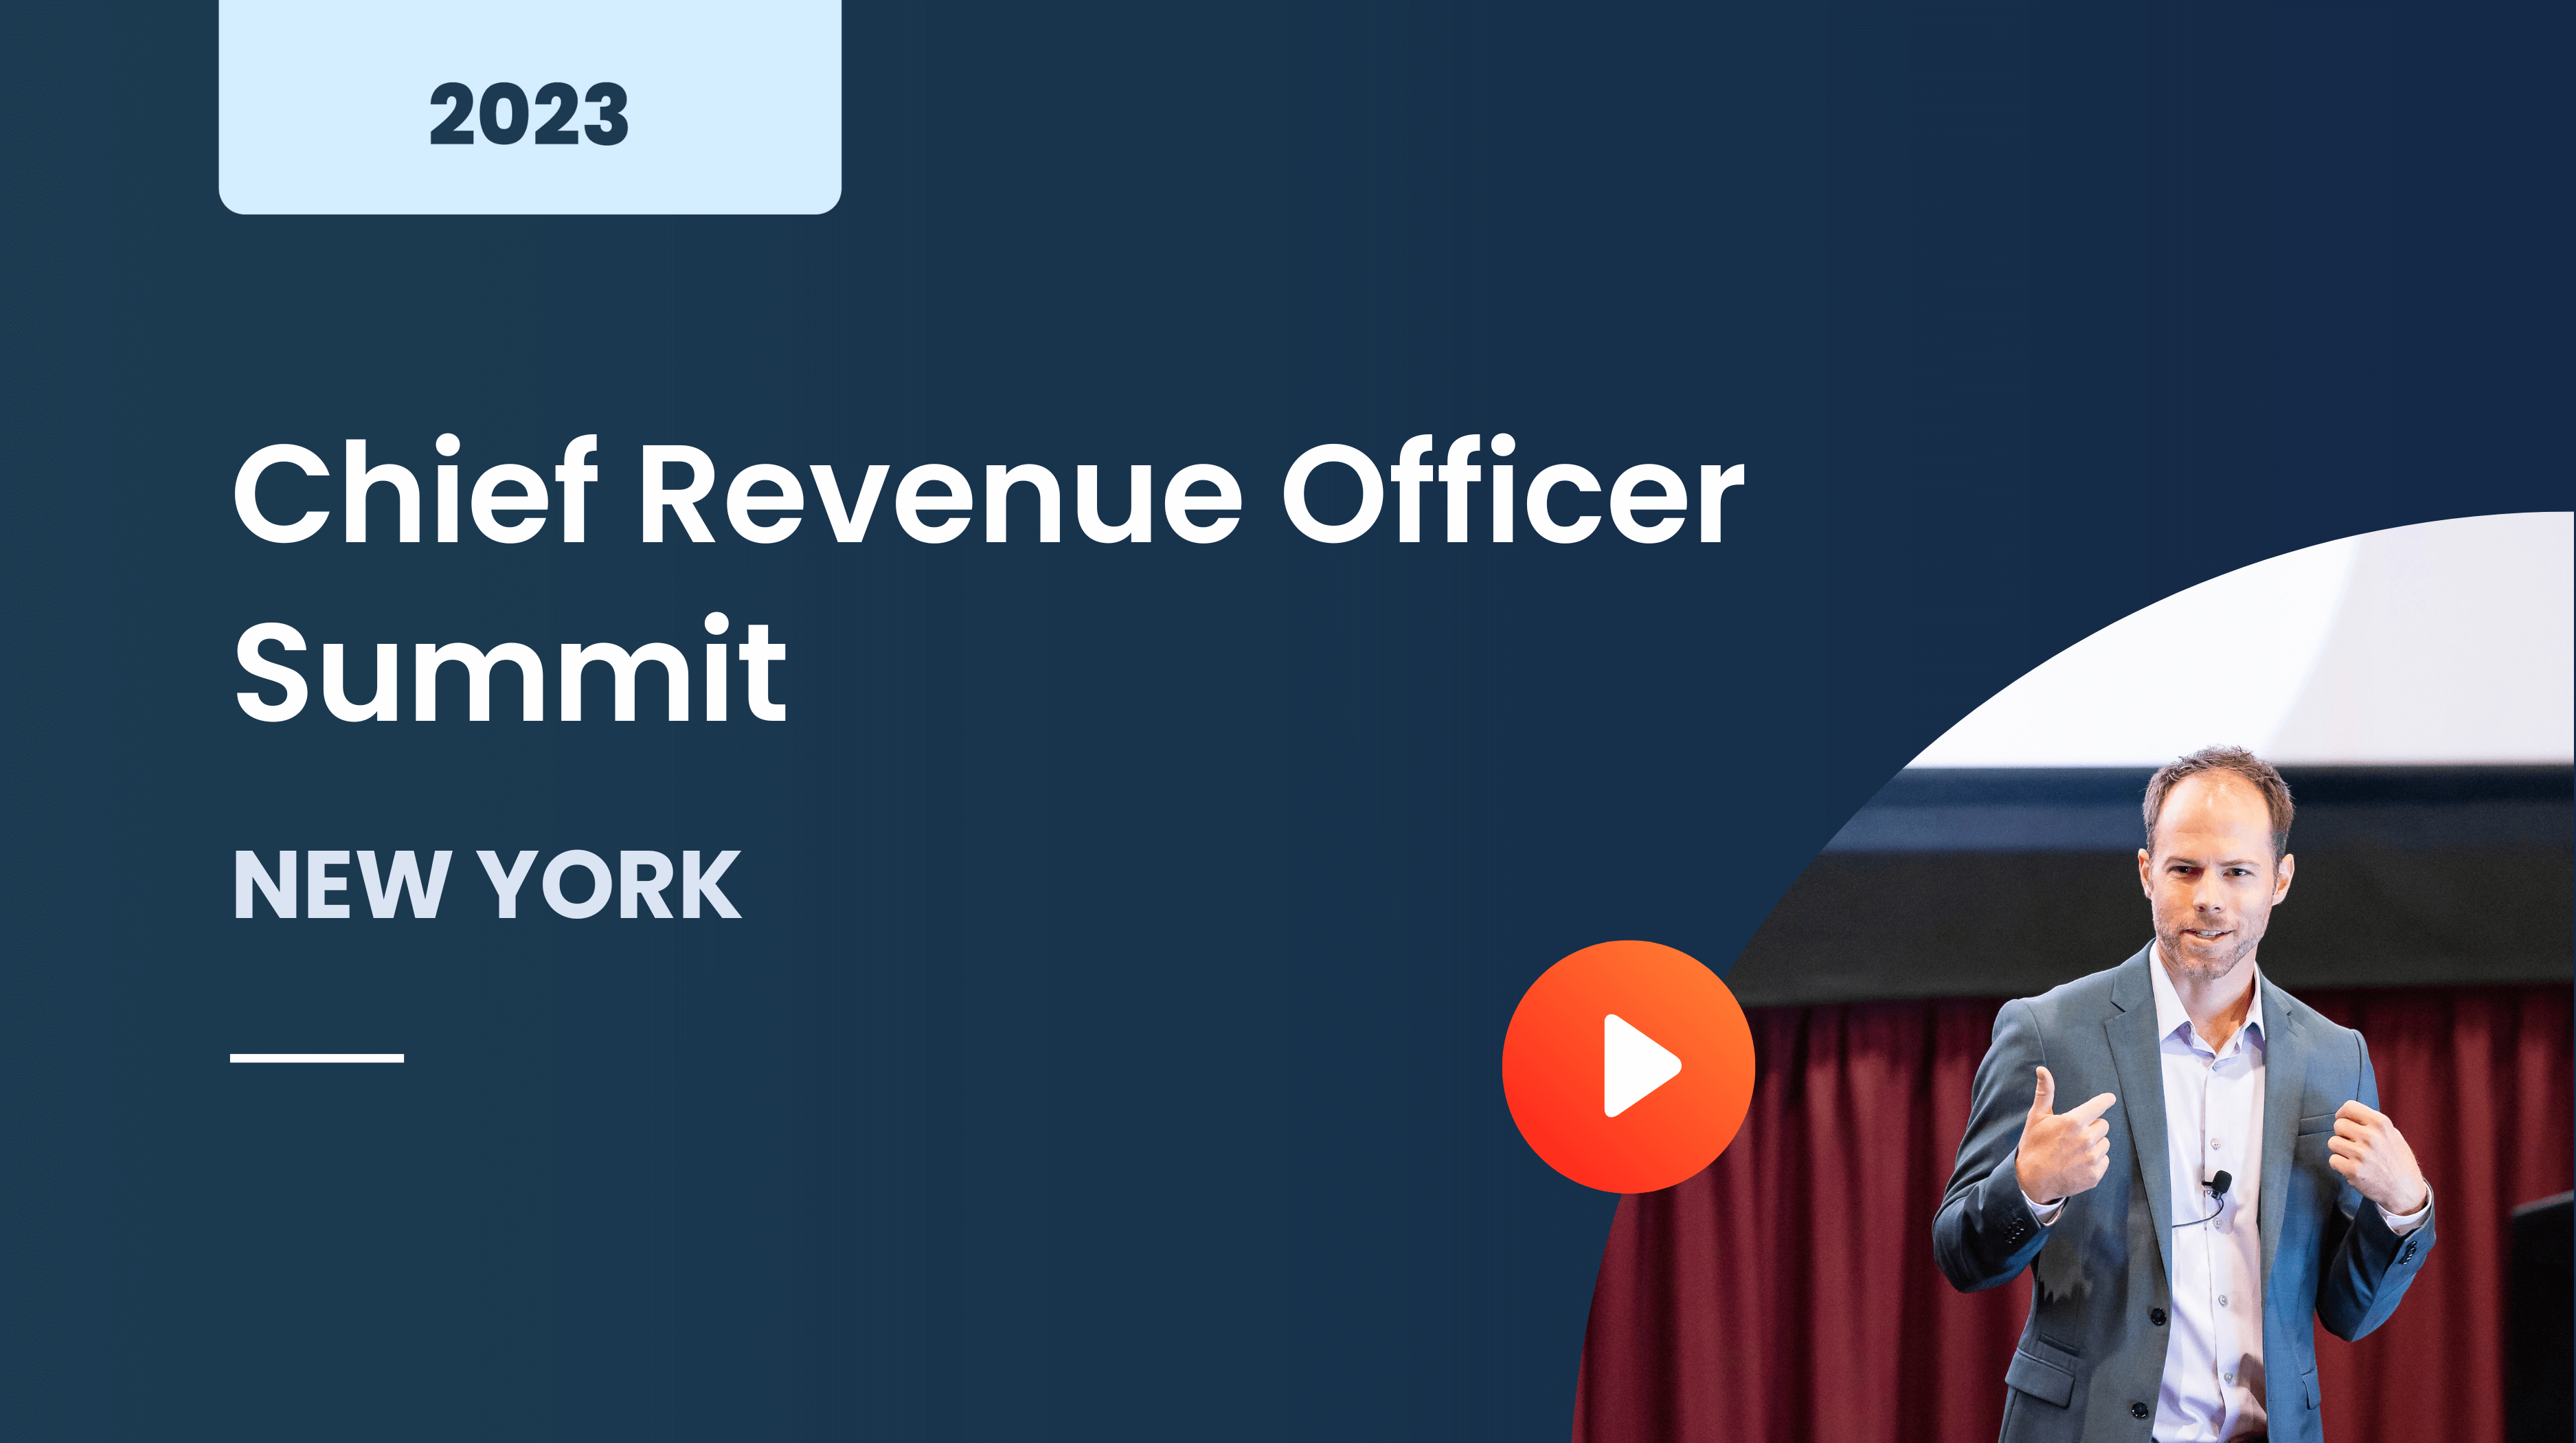 Chief Revenue Officer Summit New York 2023